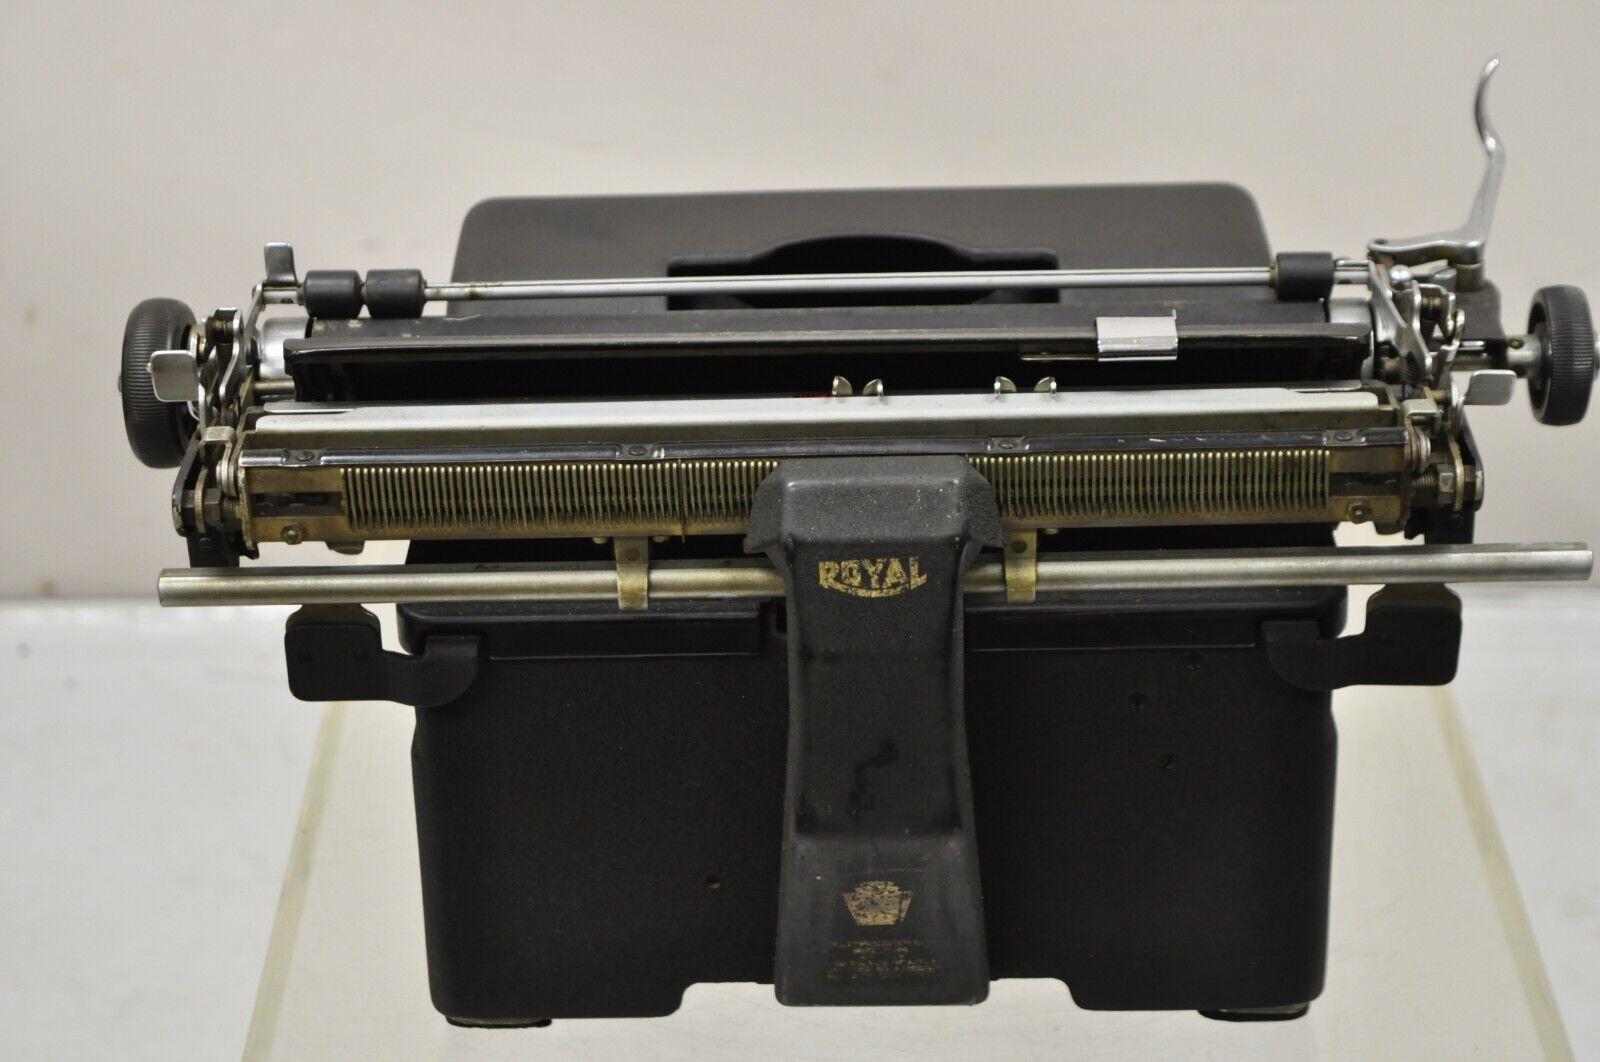 Metal Vintage 1940s Royal KMM Model 2178000 Magic Margin Touch Control Typewriter For Sale